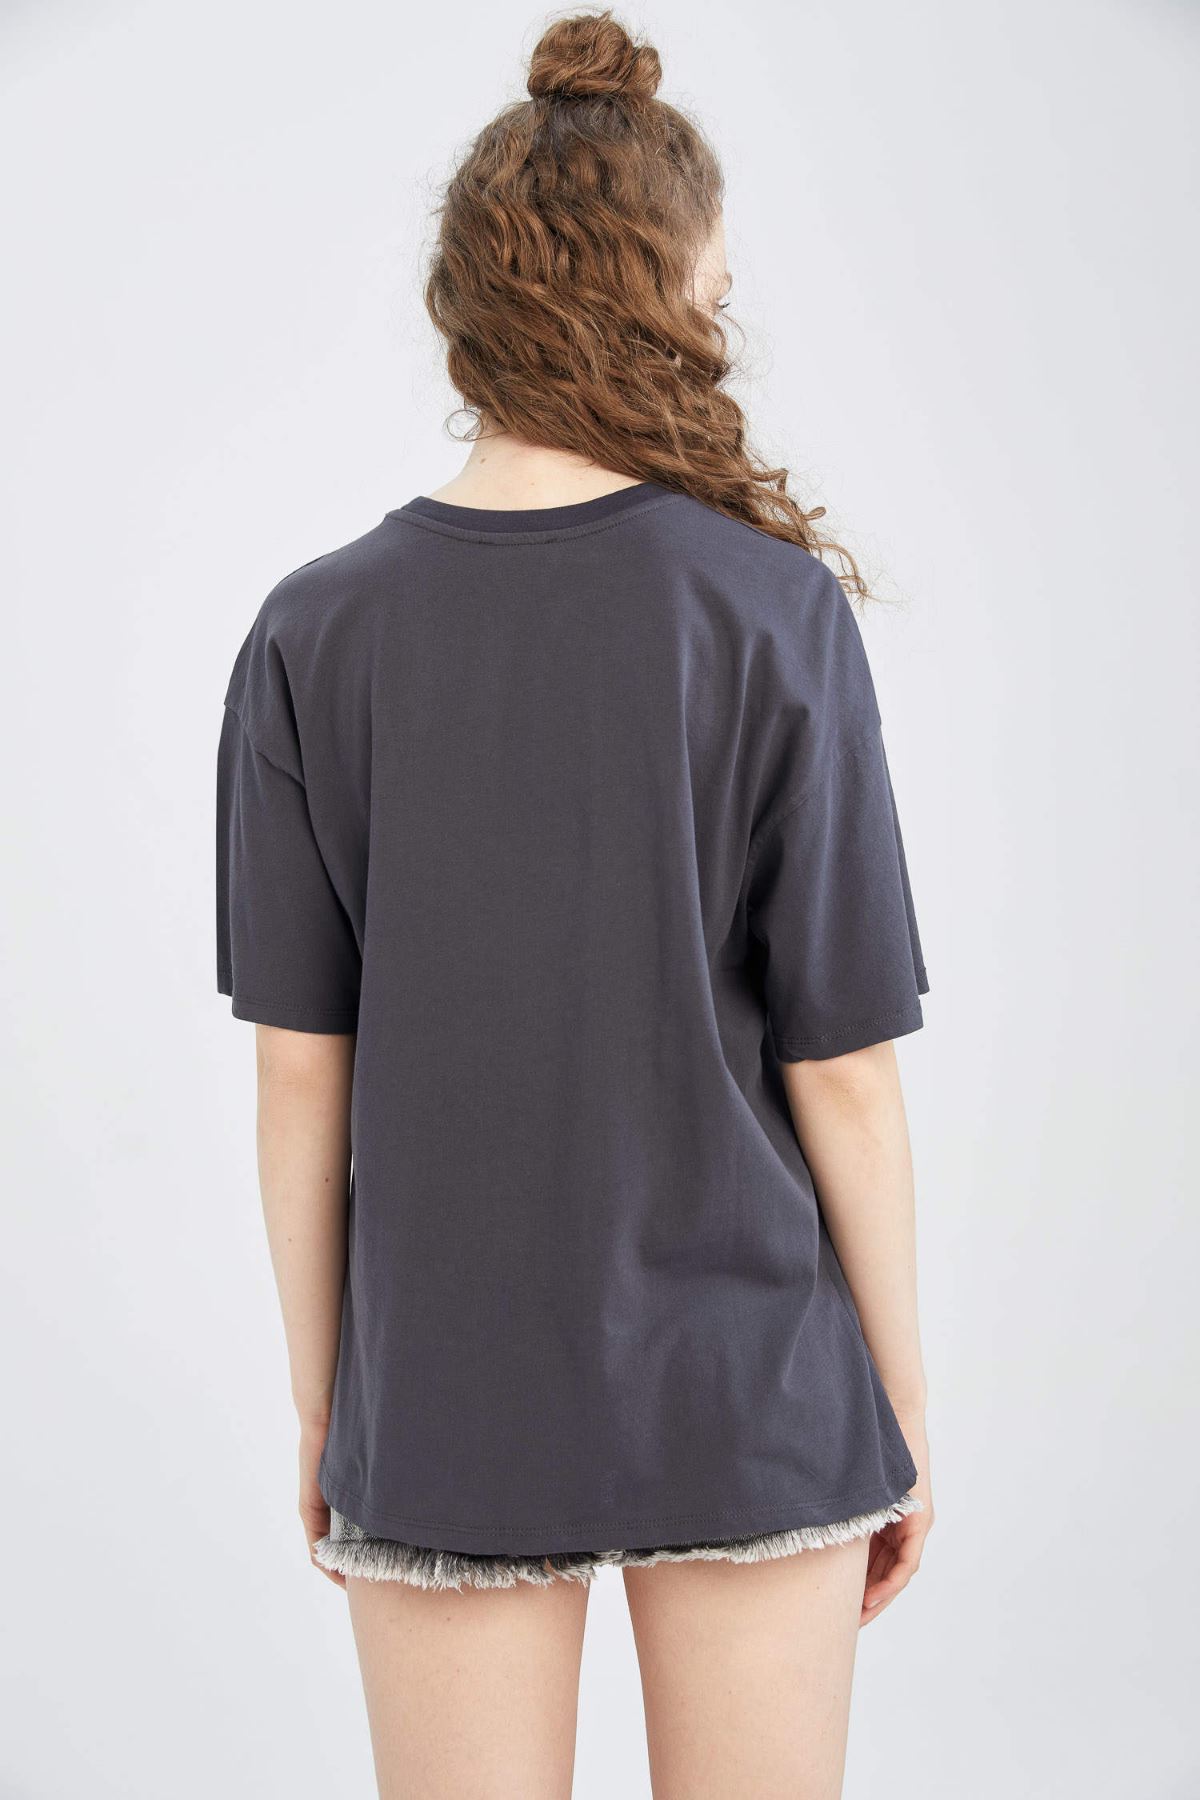 Defacto Kadın Antrasit Tişört - Y1526AZ/AR191